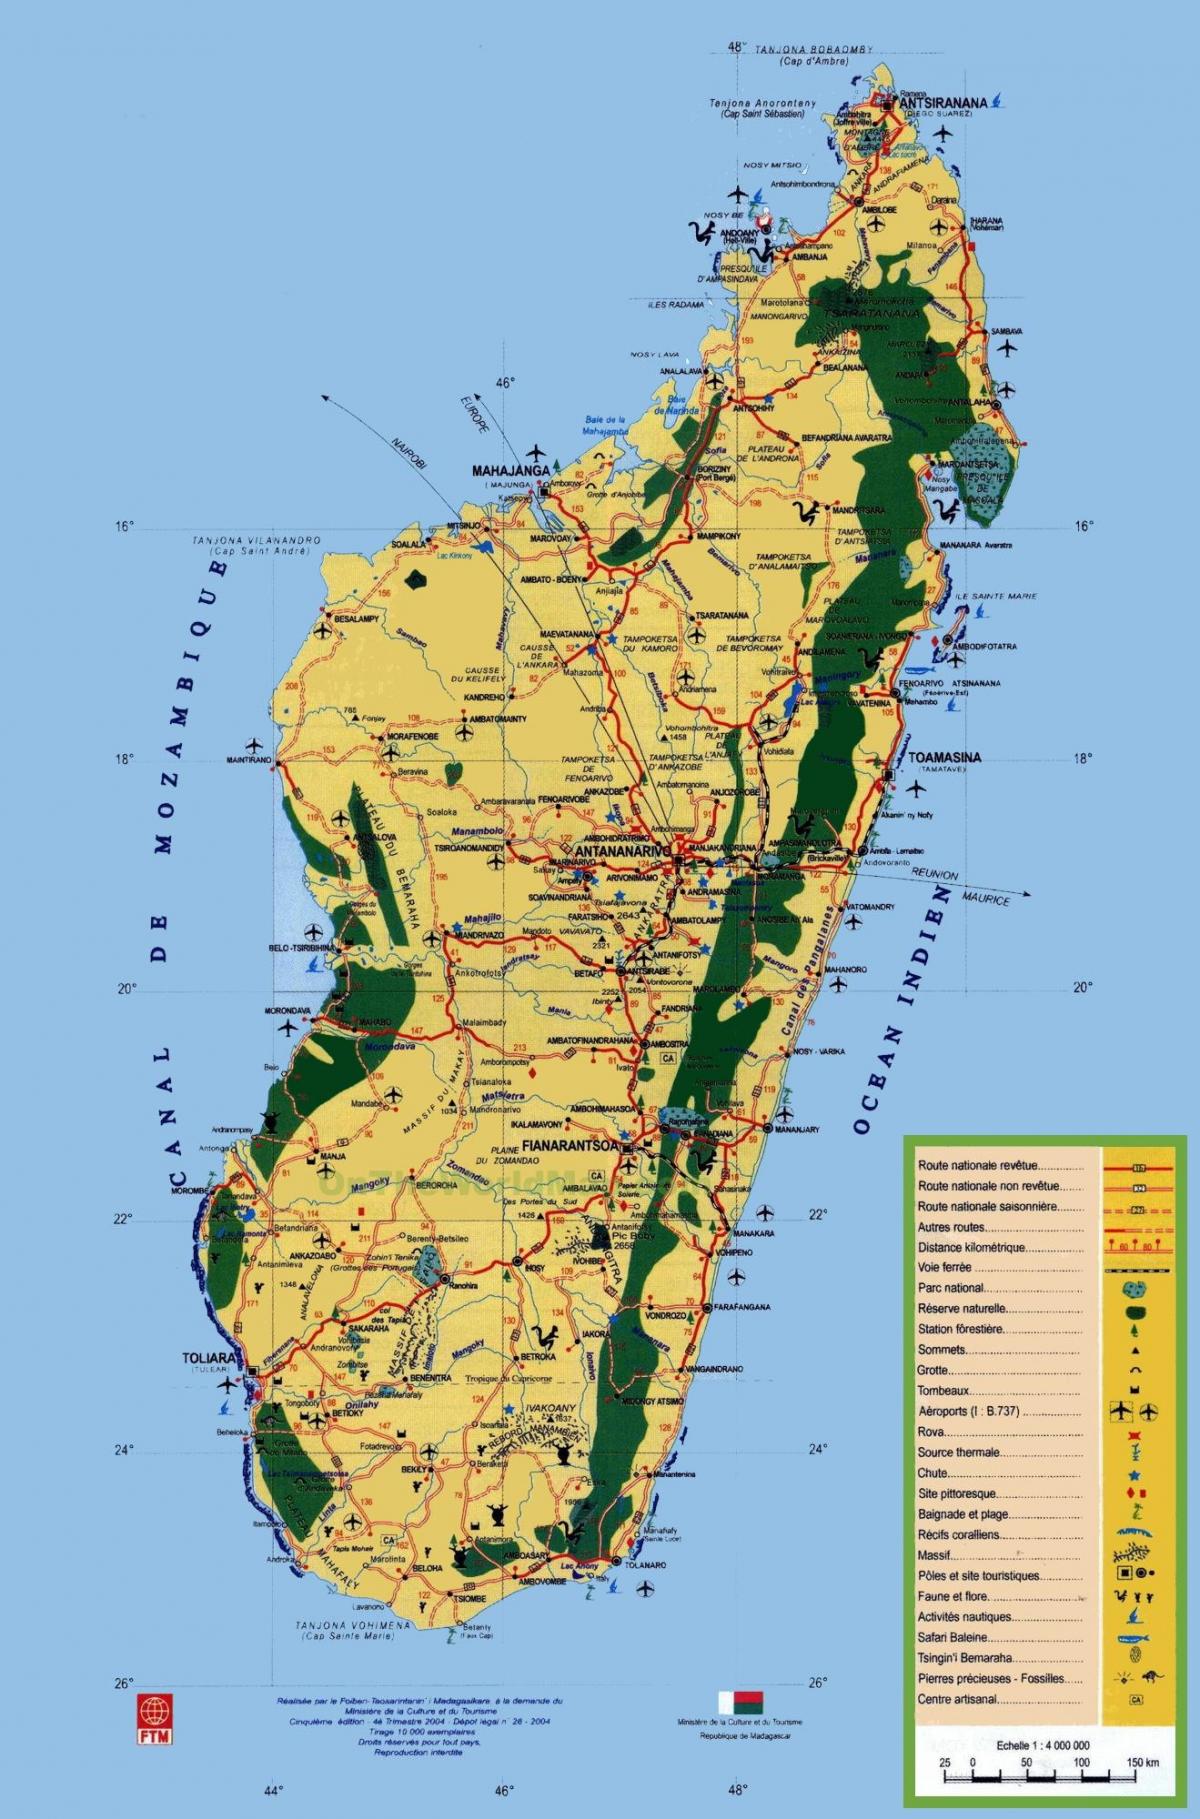 Madagaskar turistických atrakcí mapě